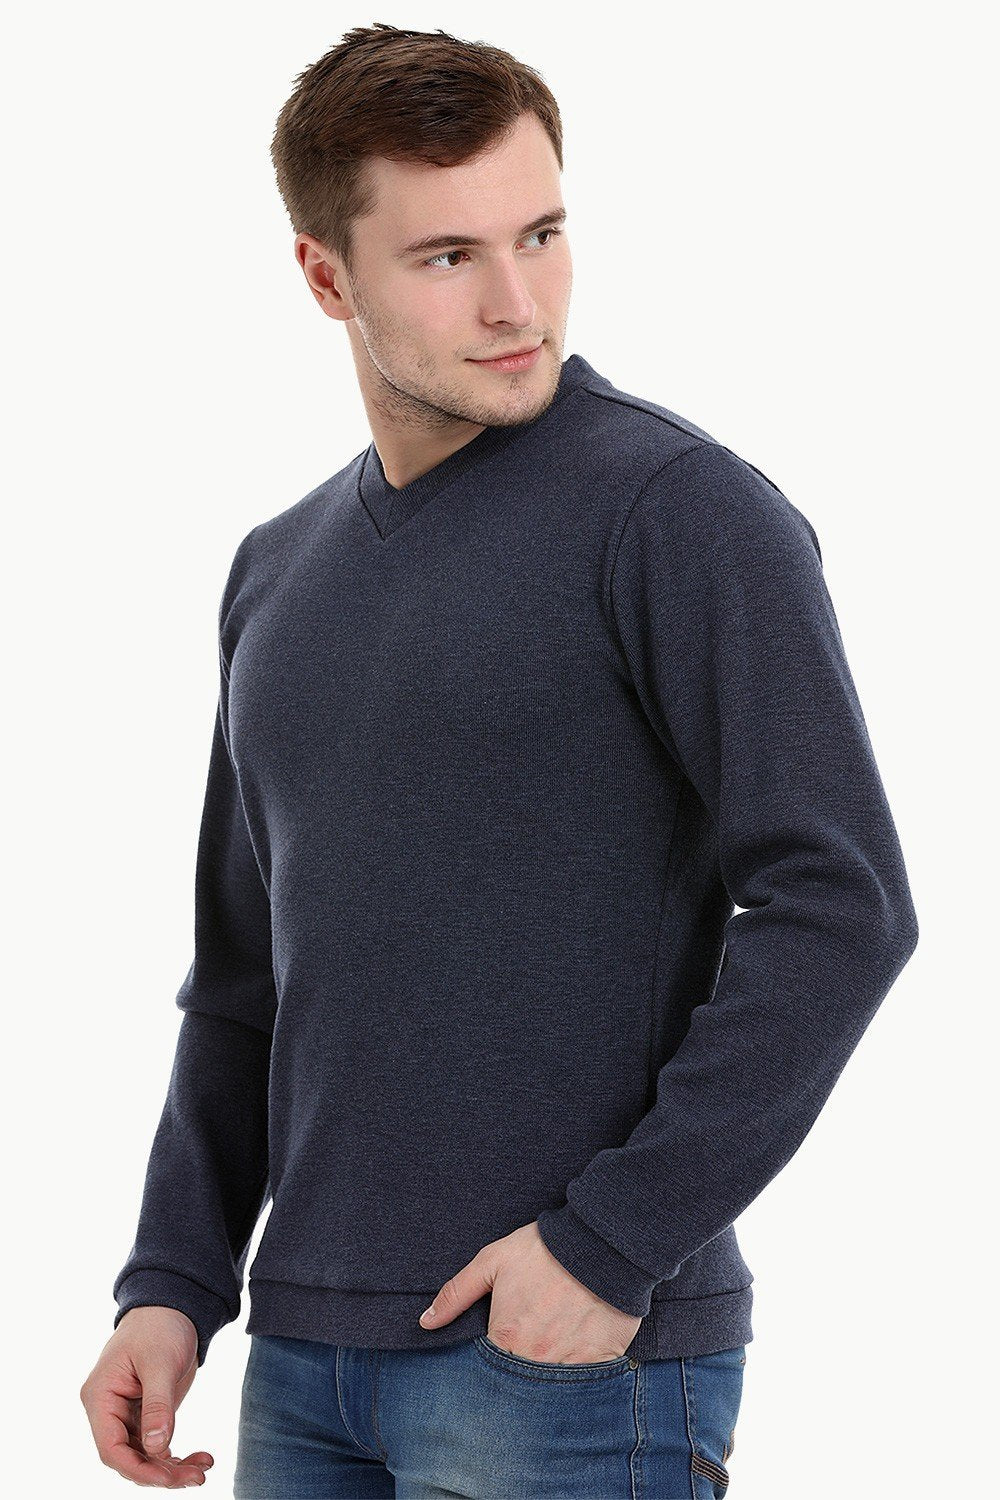 Buy Online Men's Knit Navy V-Neck Sweatshirt Online @ Zobello